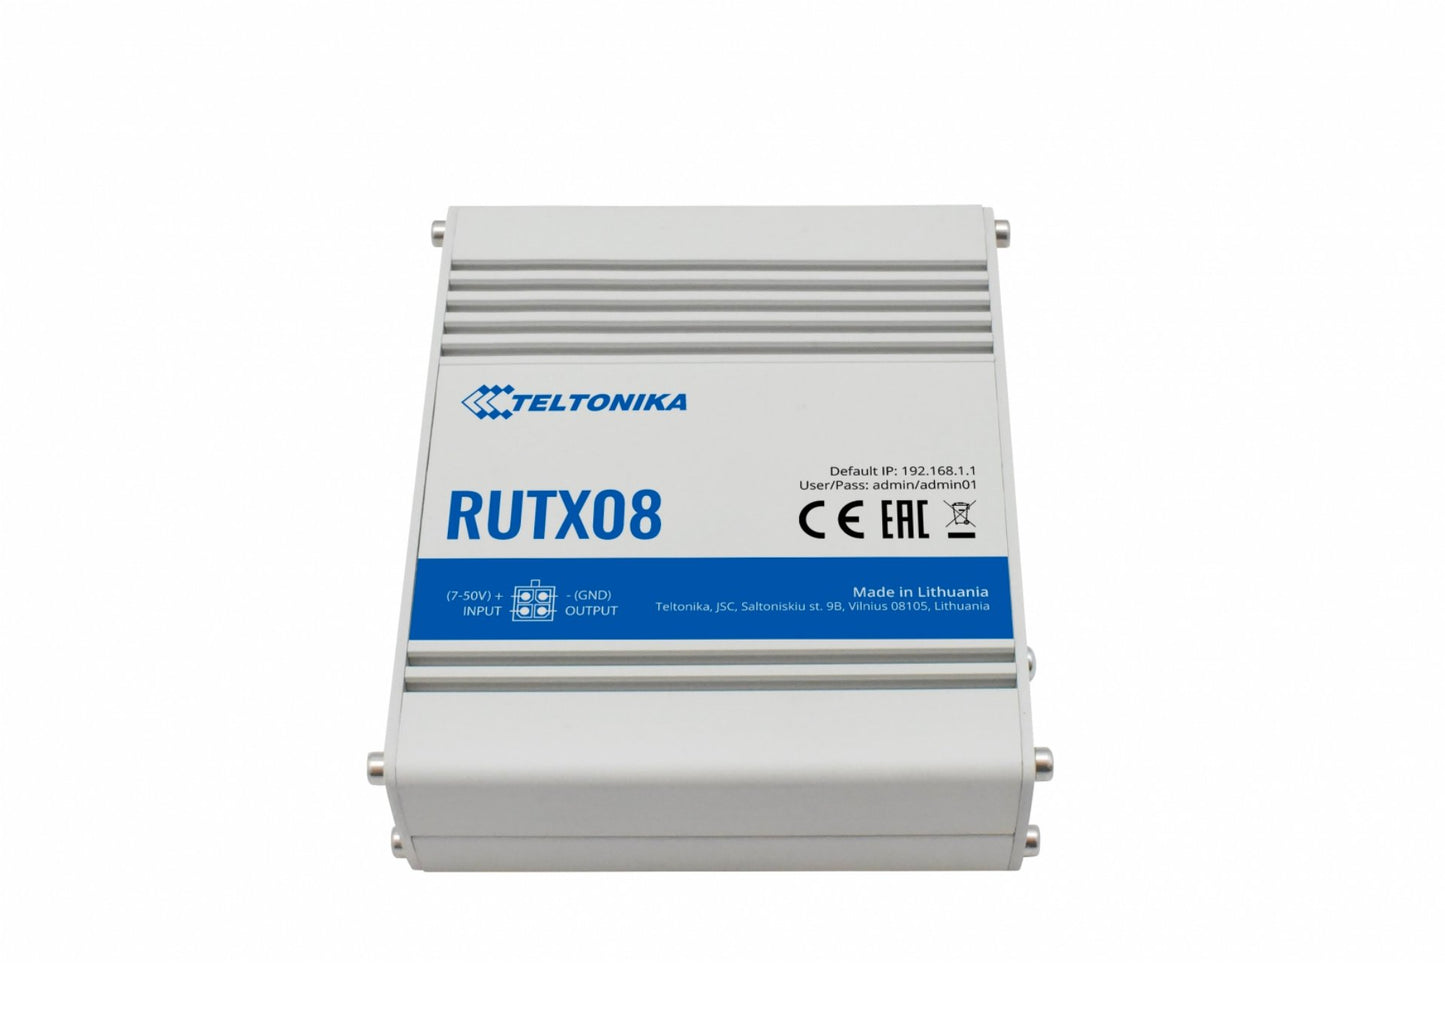 Teltonika RUTX08 4-port Industrial Ethernet Router